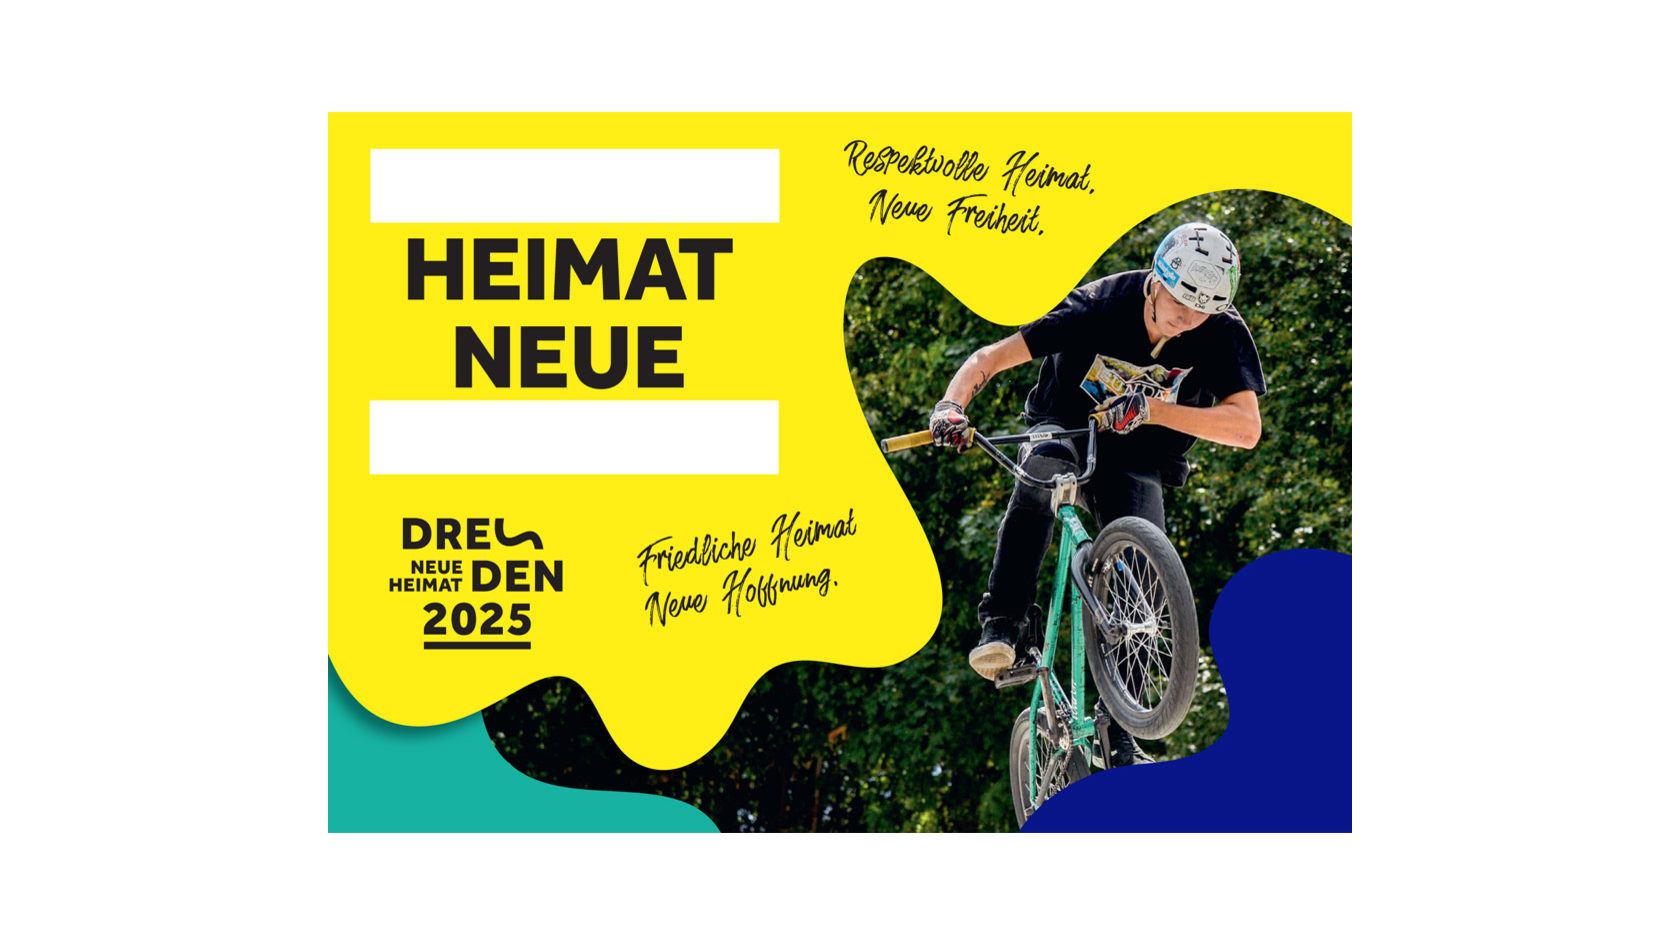 Young BMX biker as image motif of the postcard campaign.